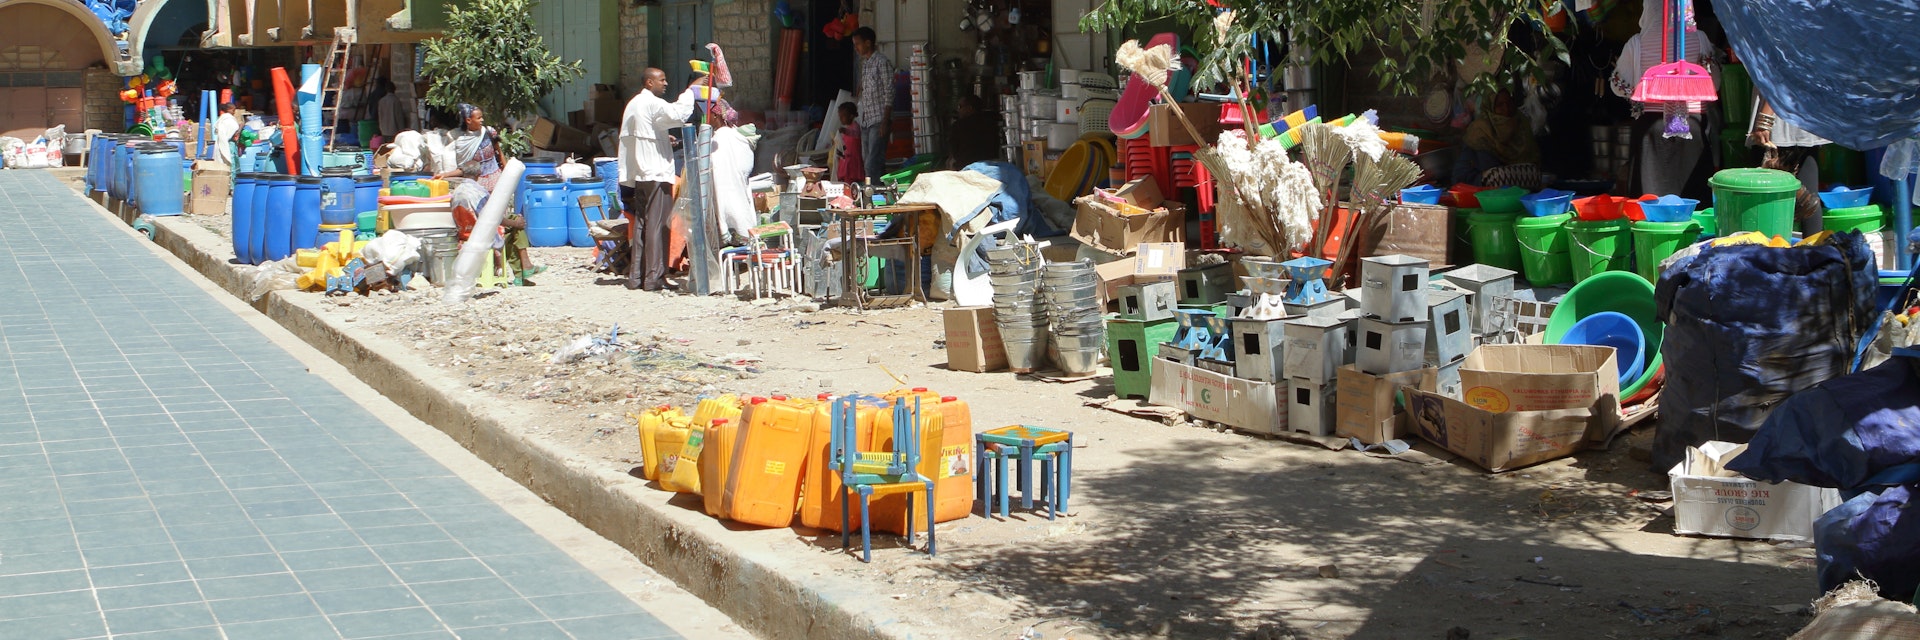 The Market Hall of Mekele in Ethiopia, 10. November 2012